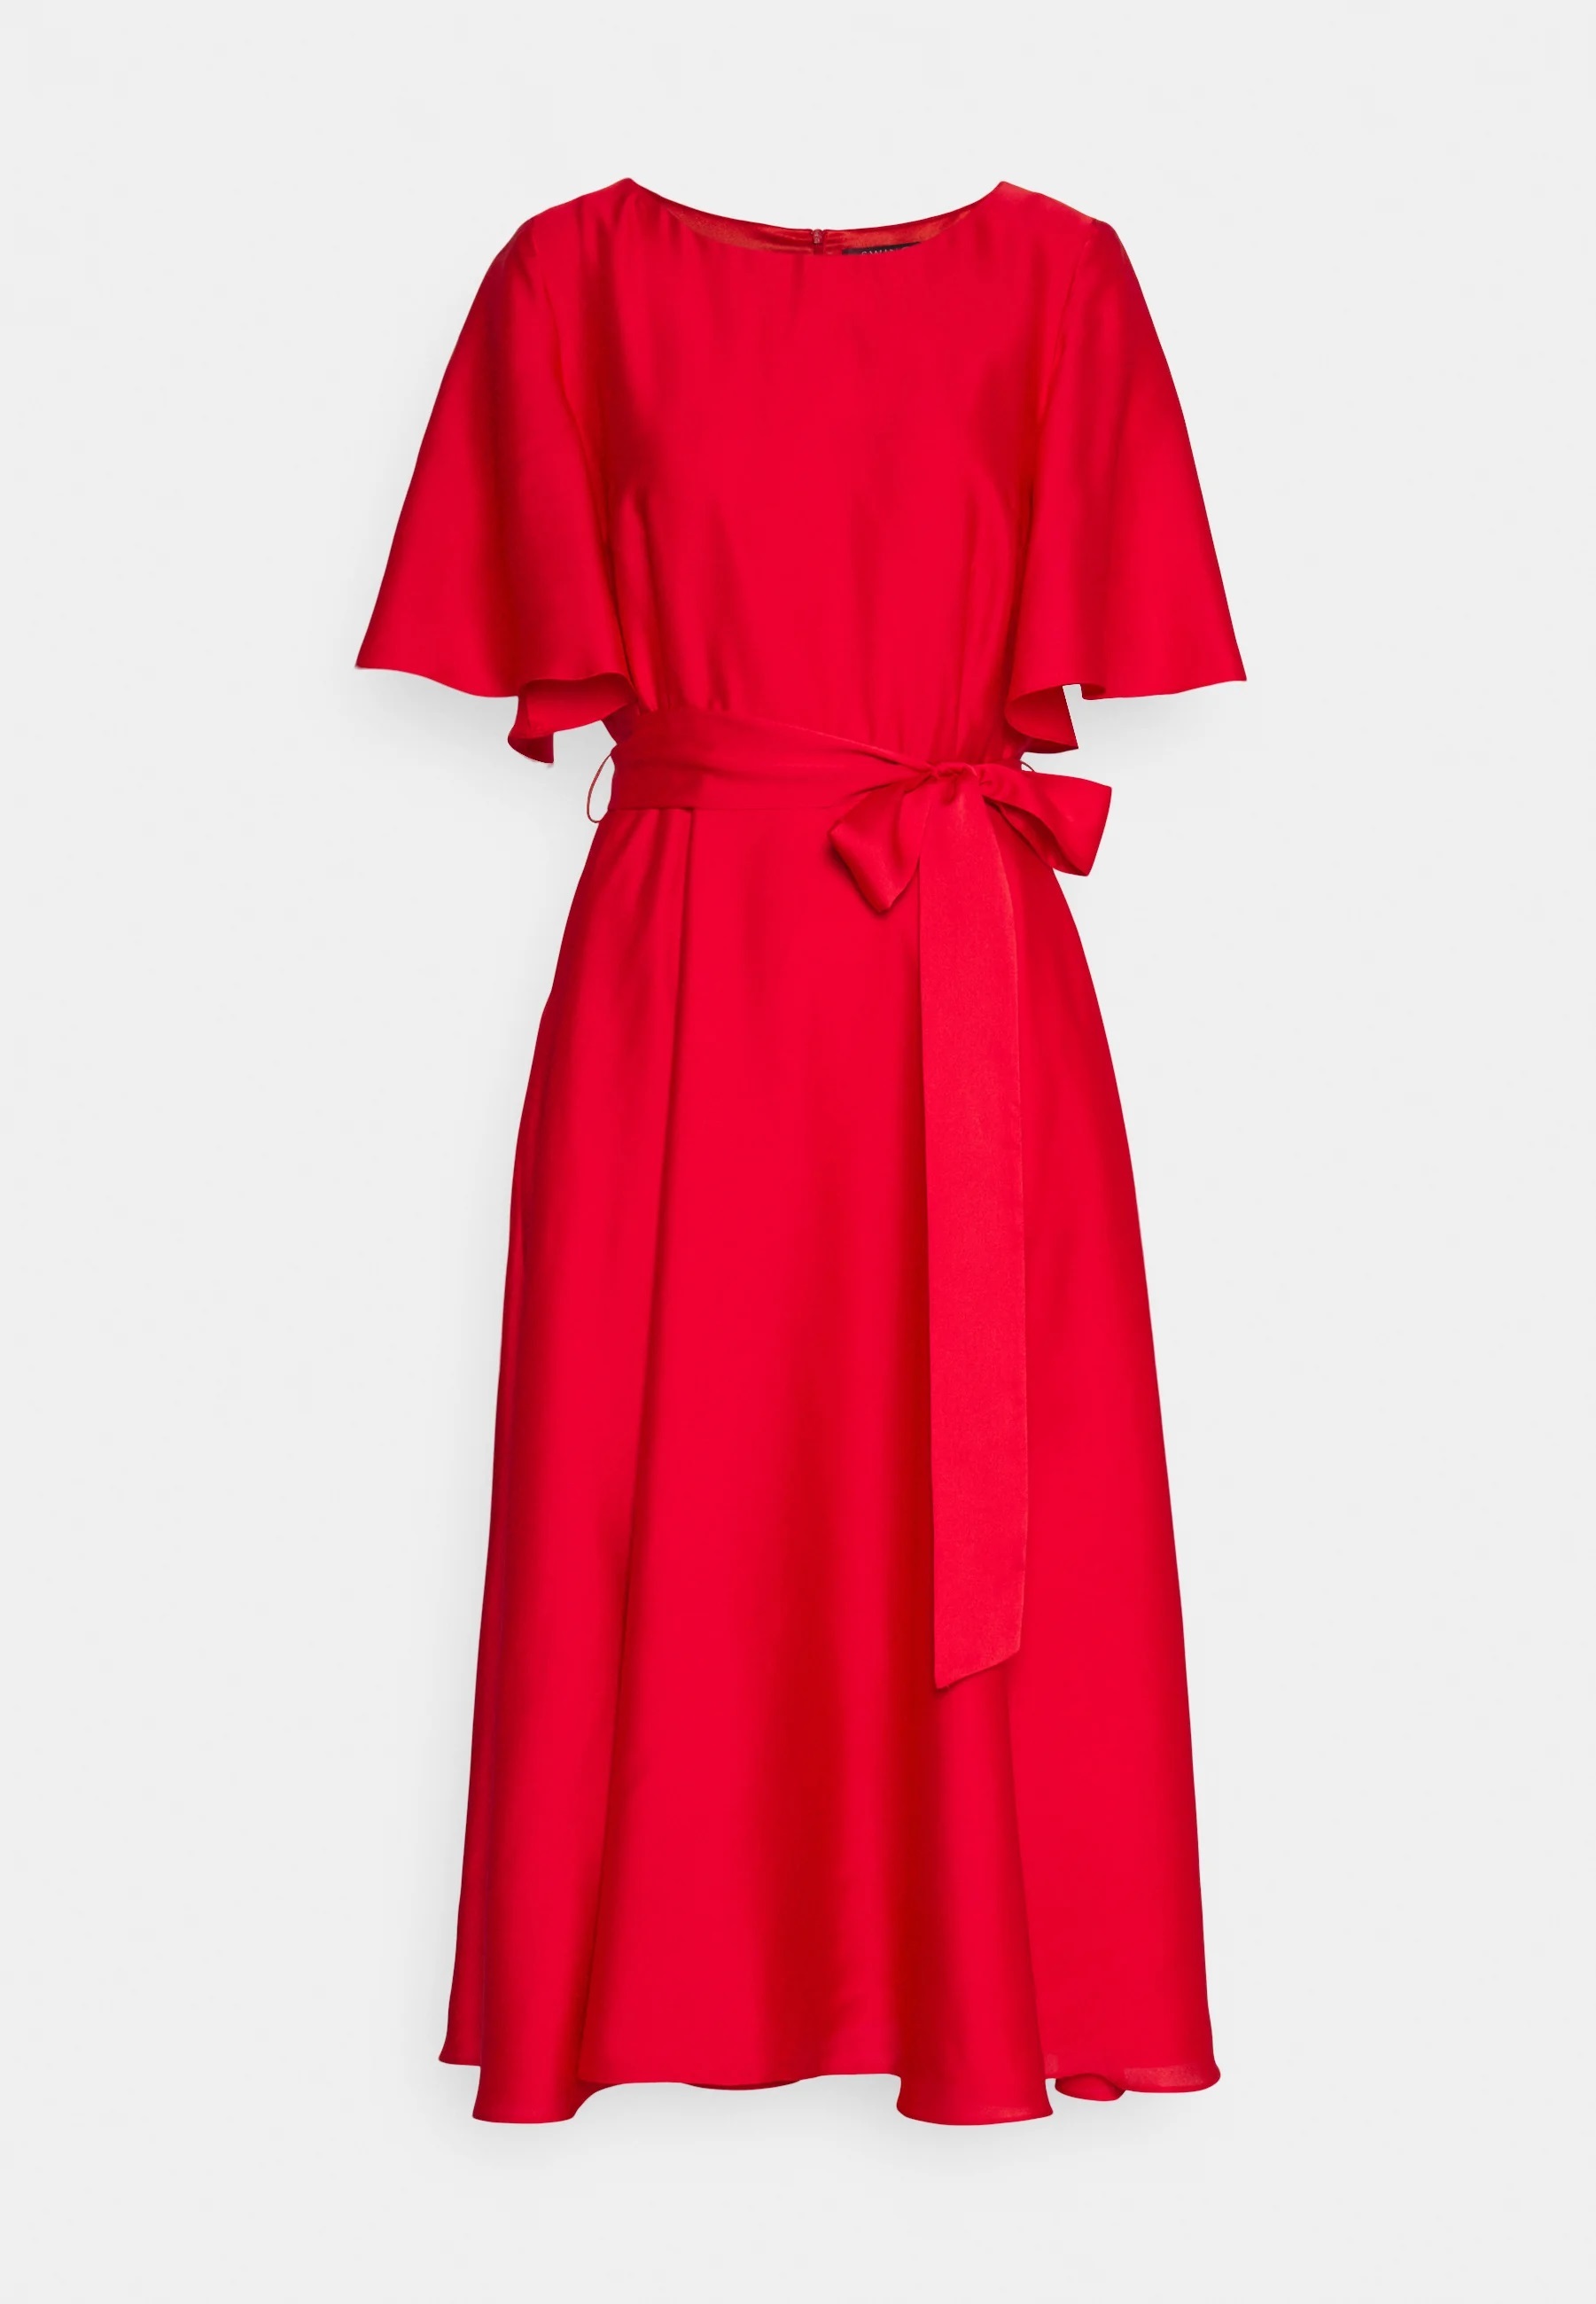 Vestido rojo de Swing dress, en Zalando (152,95 euros)